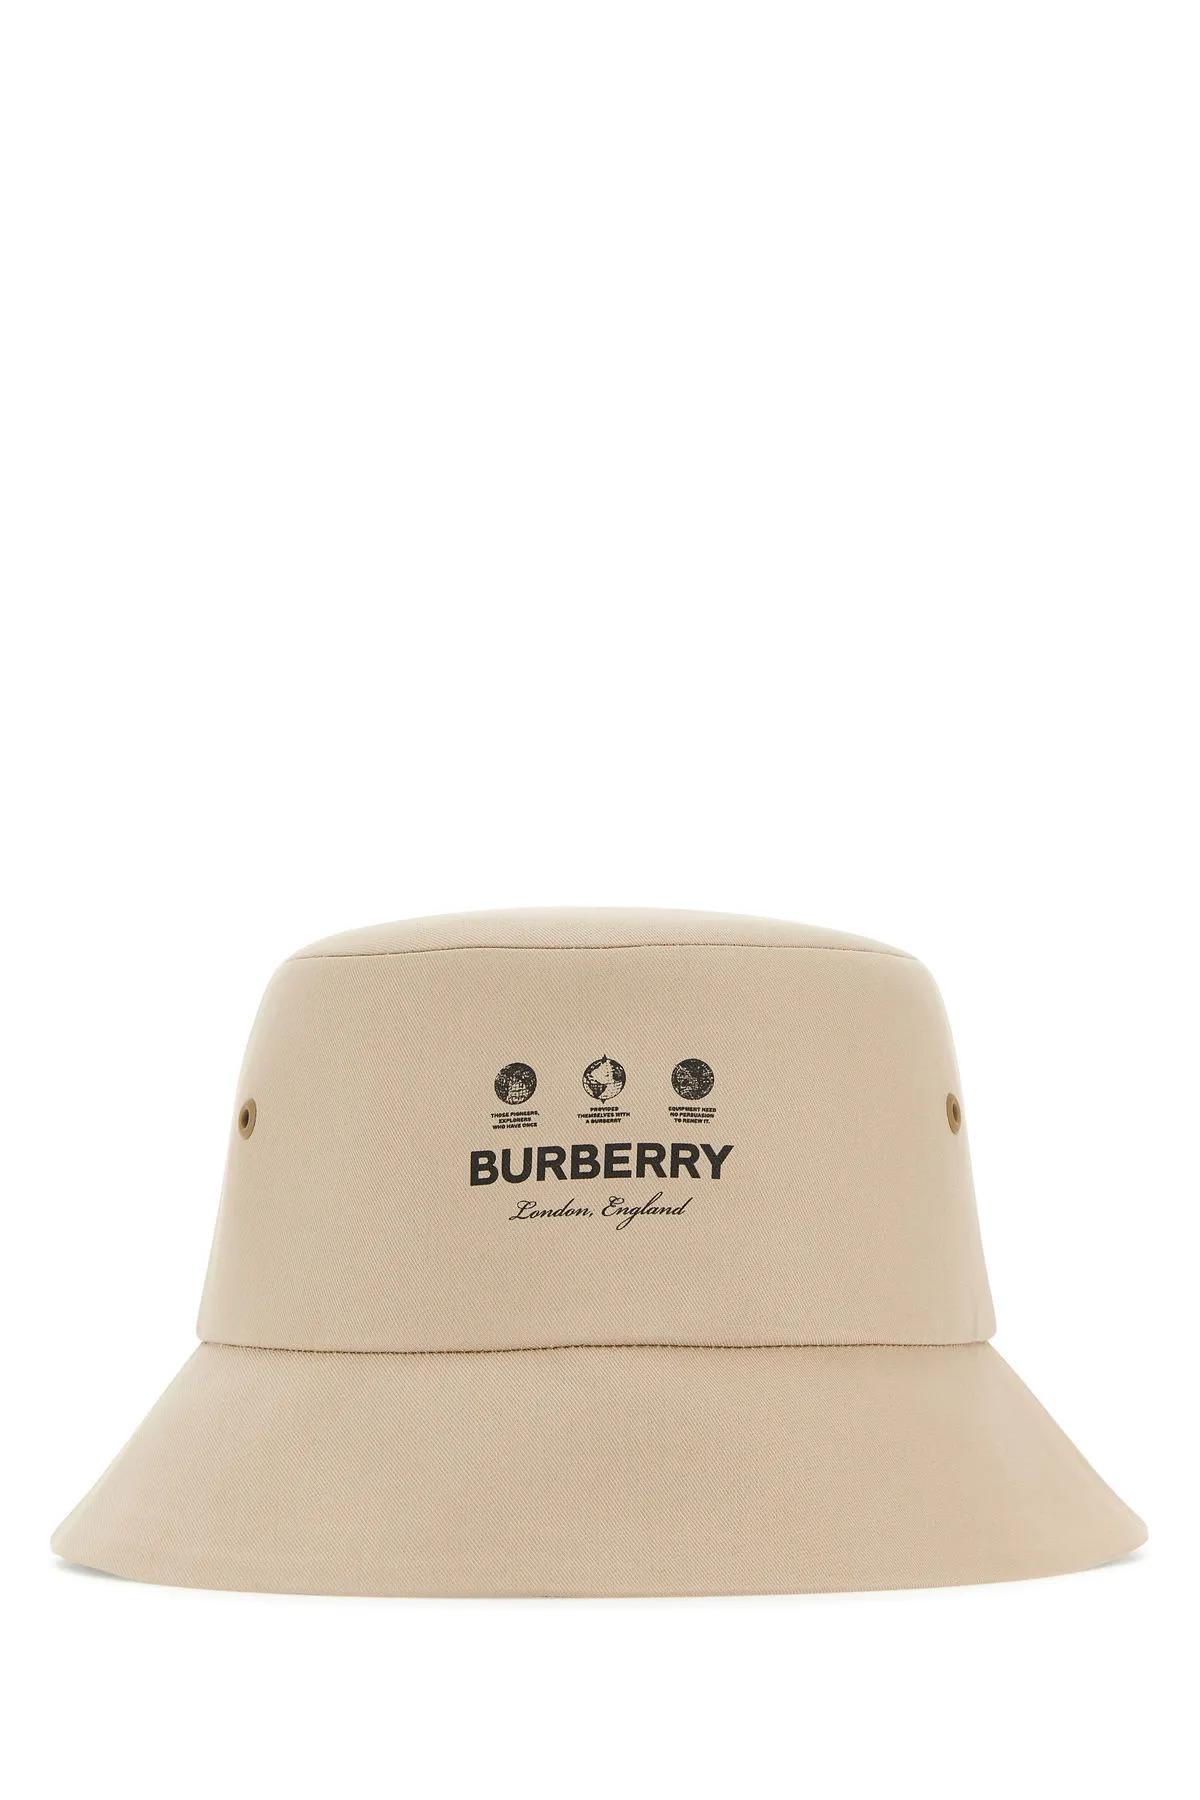 BURBERRY BEIGE GABARDINE HAT